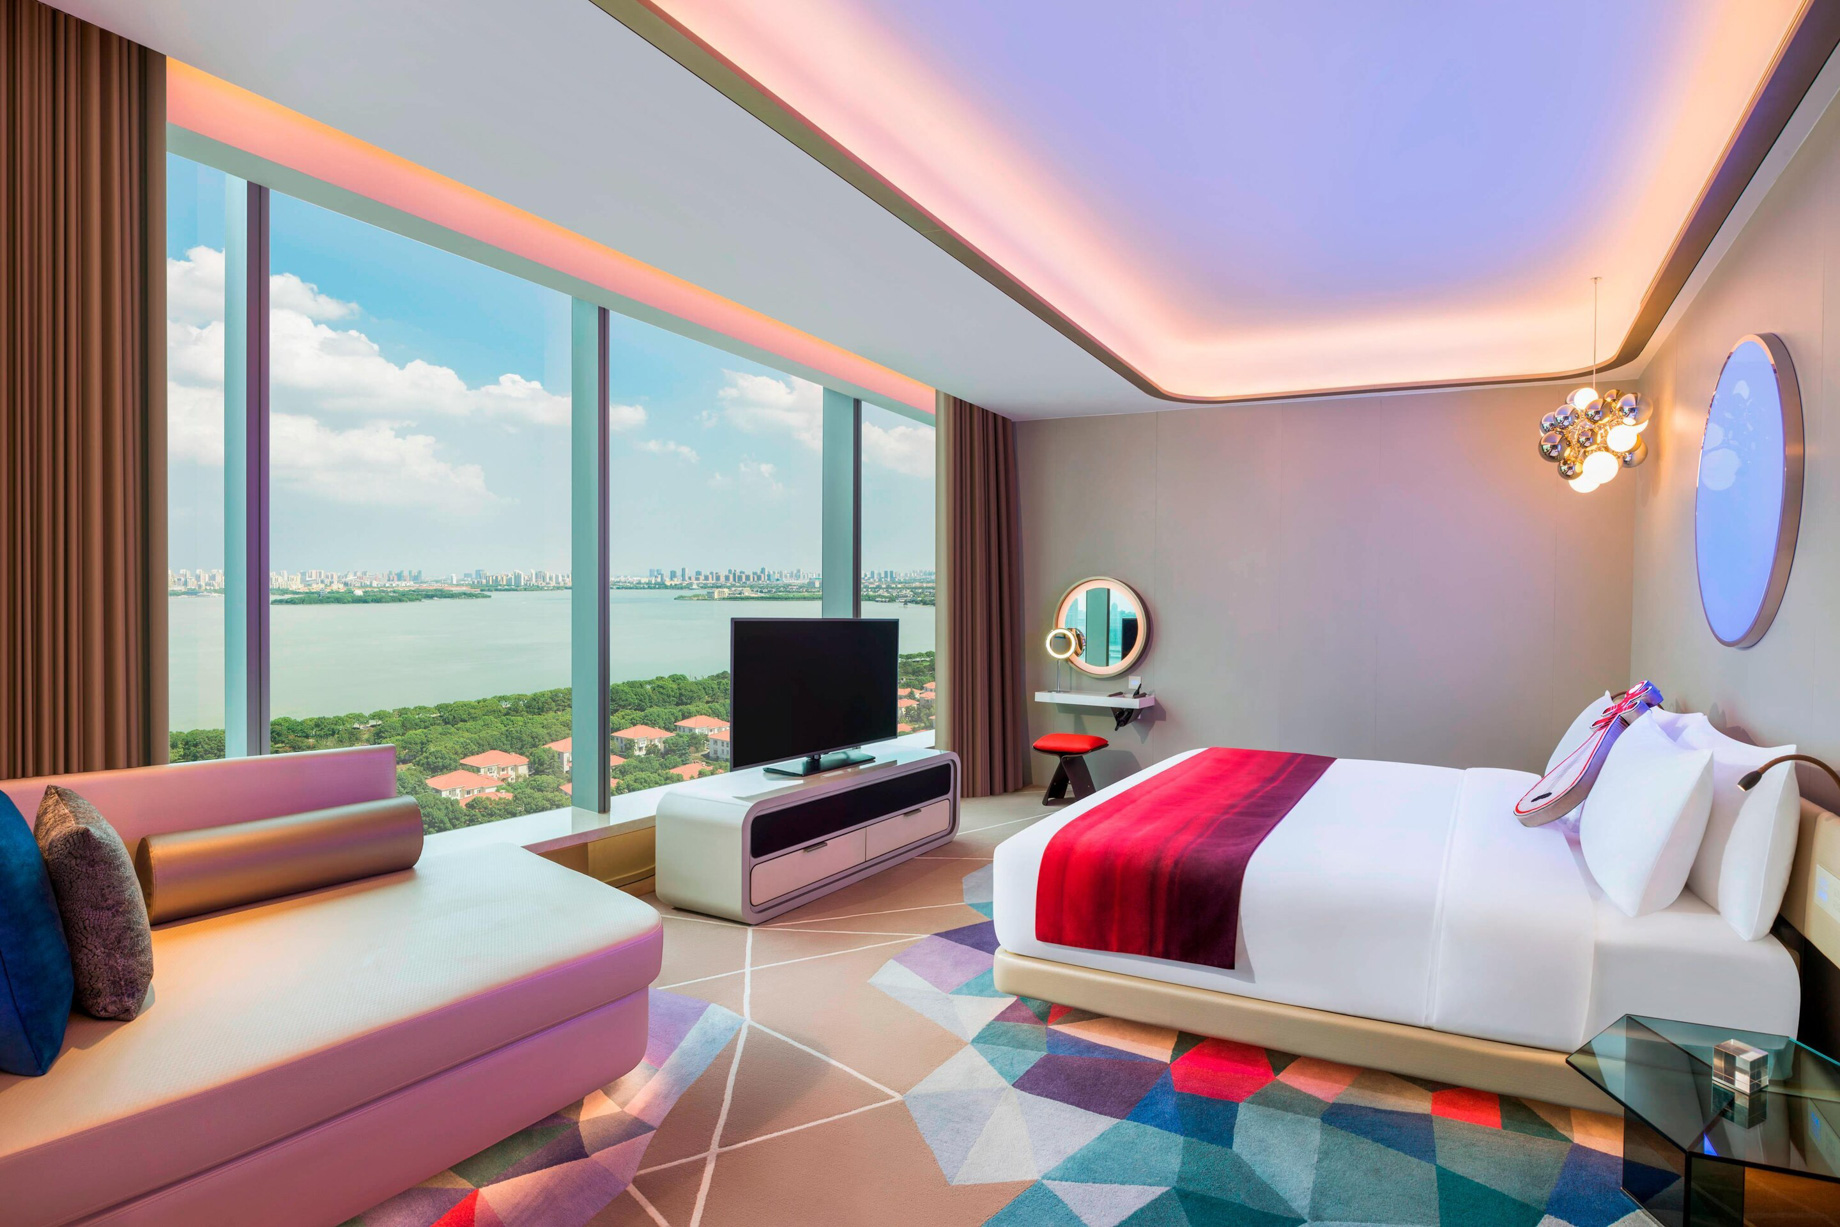 W Suzhou Hotel – Suzhou, China – Mega Guest Room